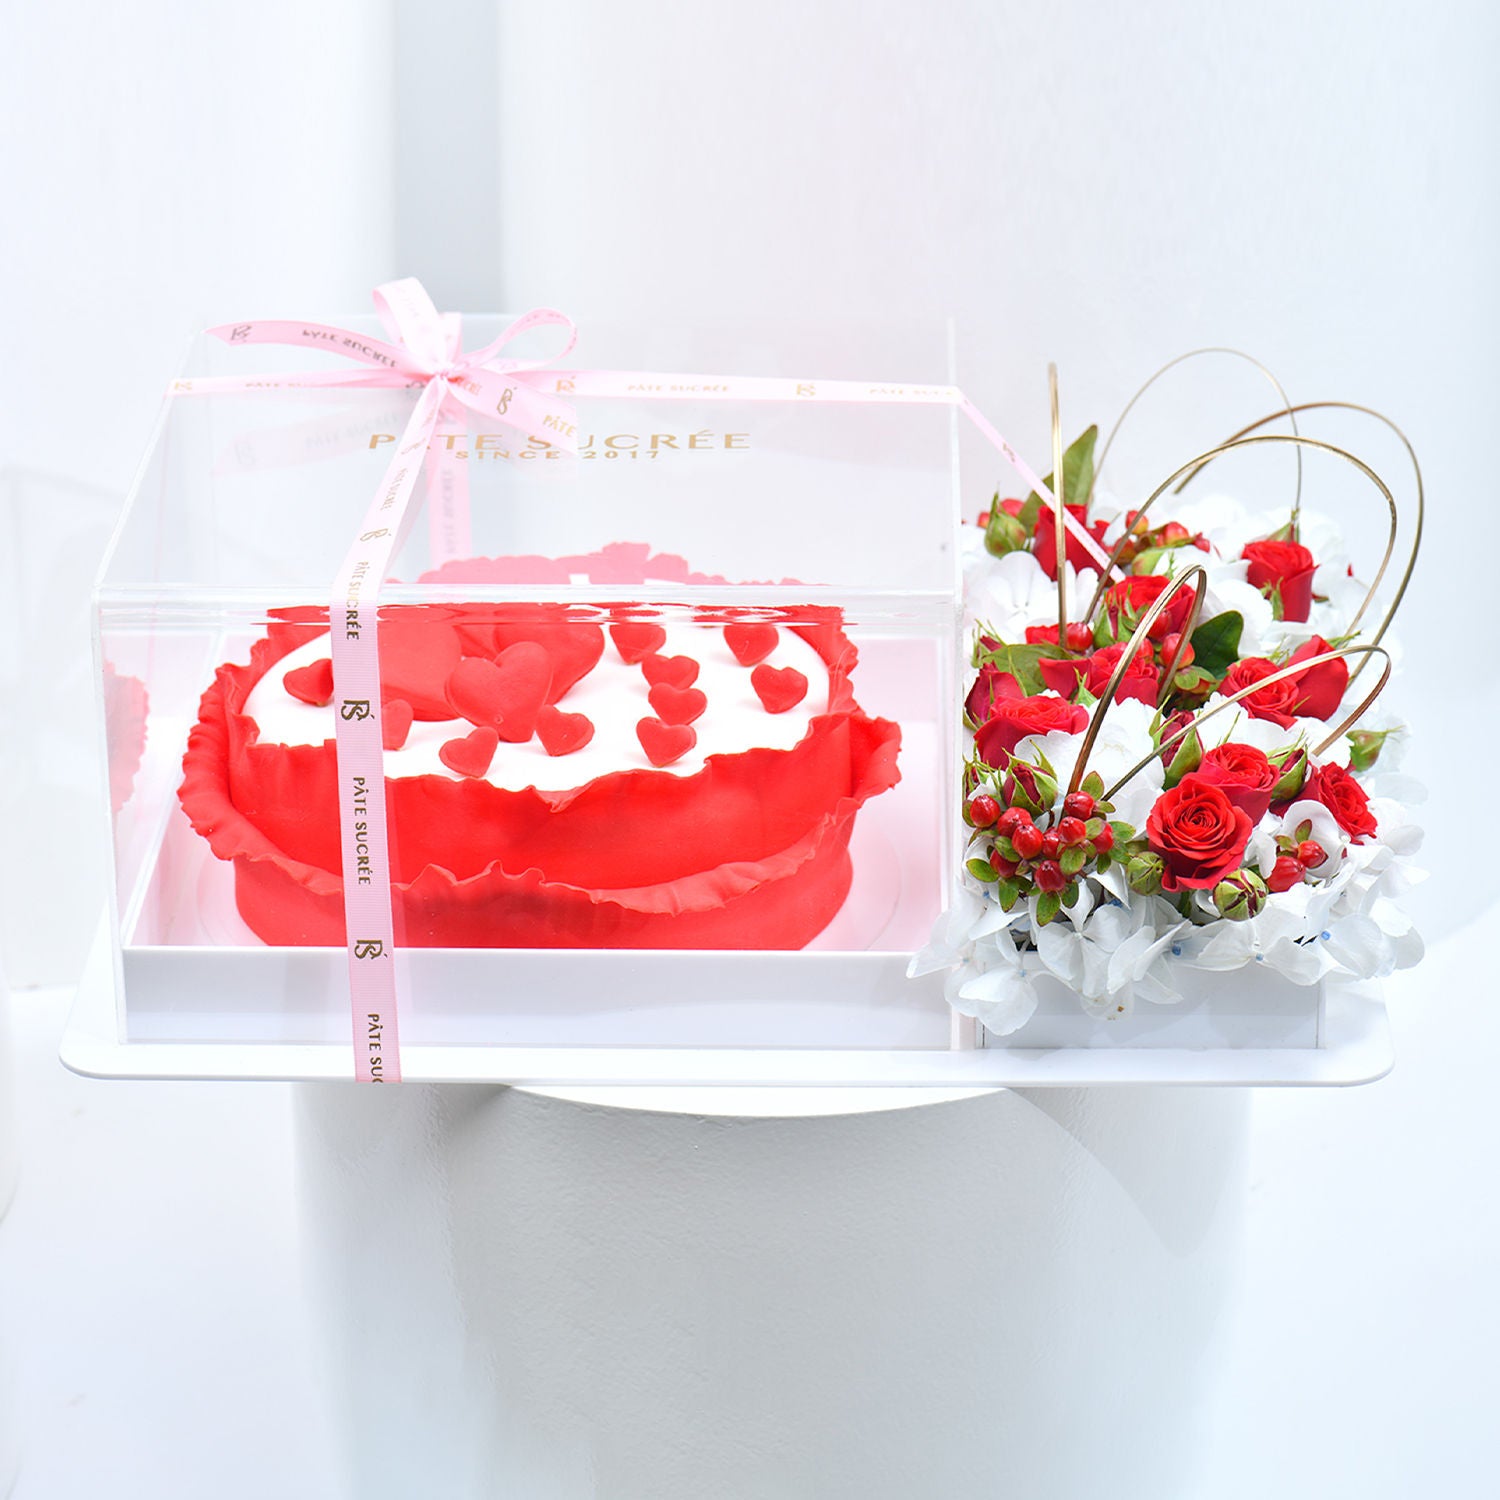 Valentine's Pate Sucree Vanilla Cake & Blooms